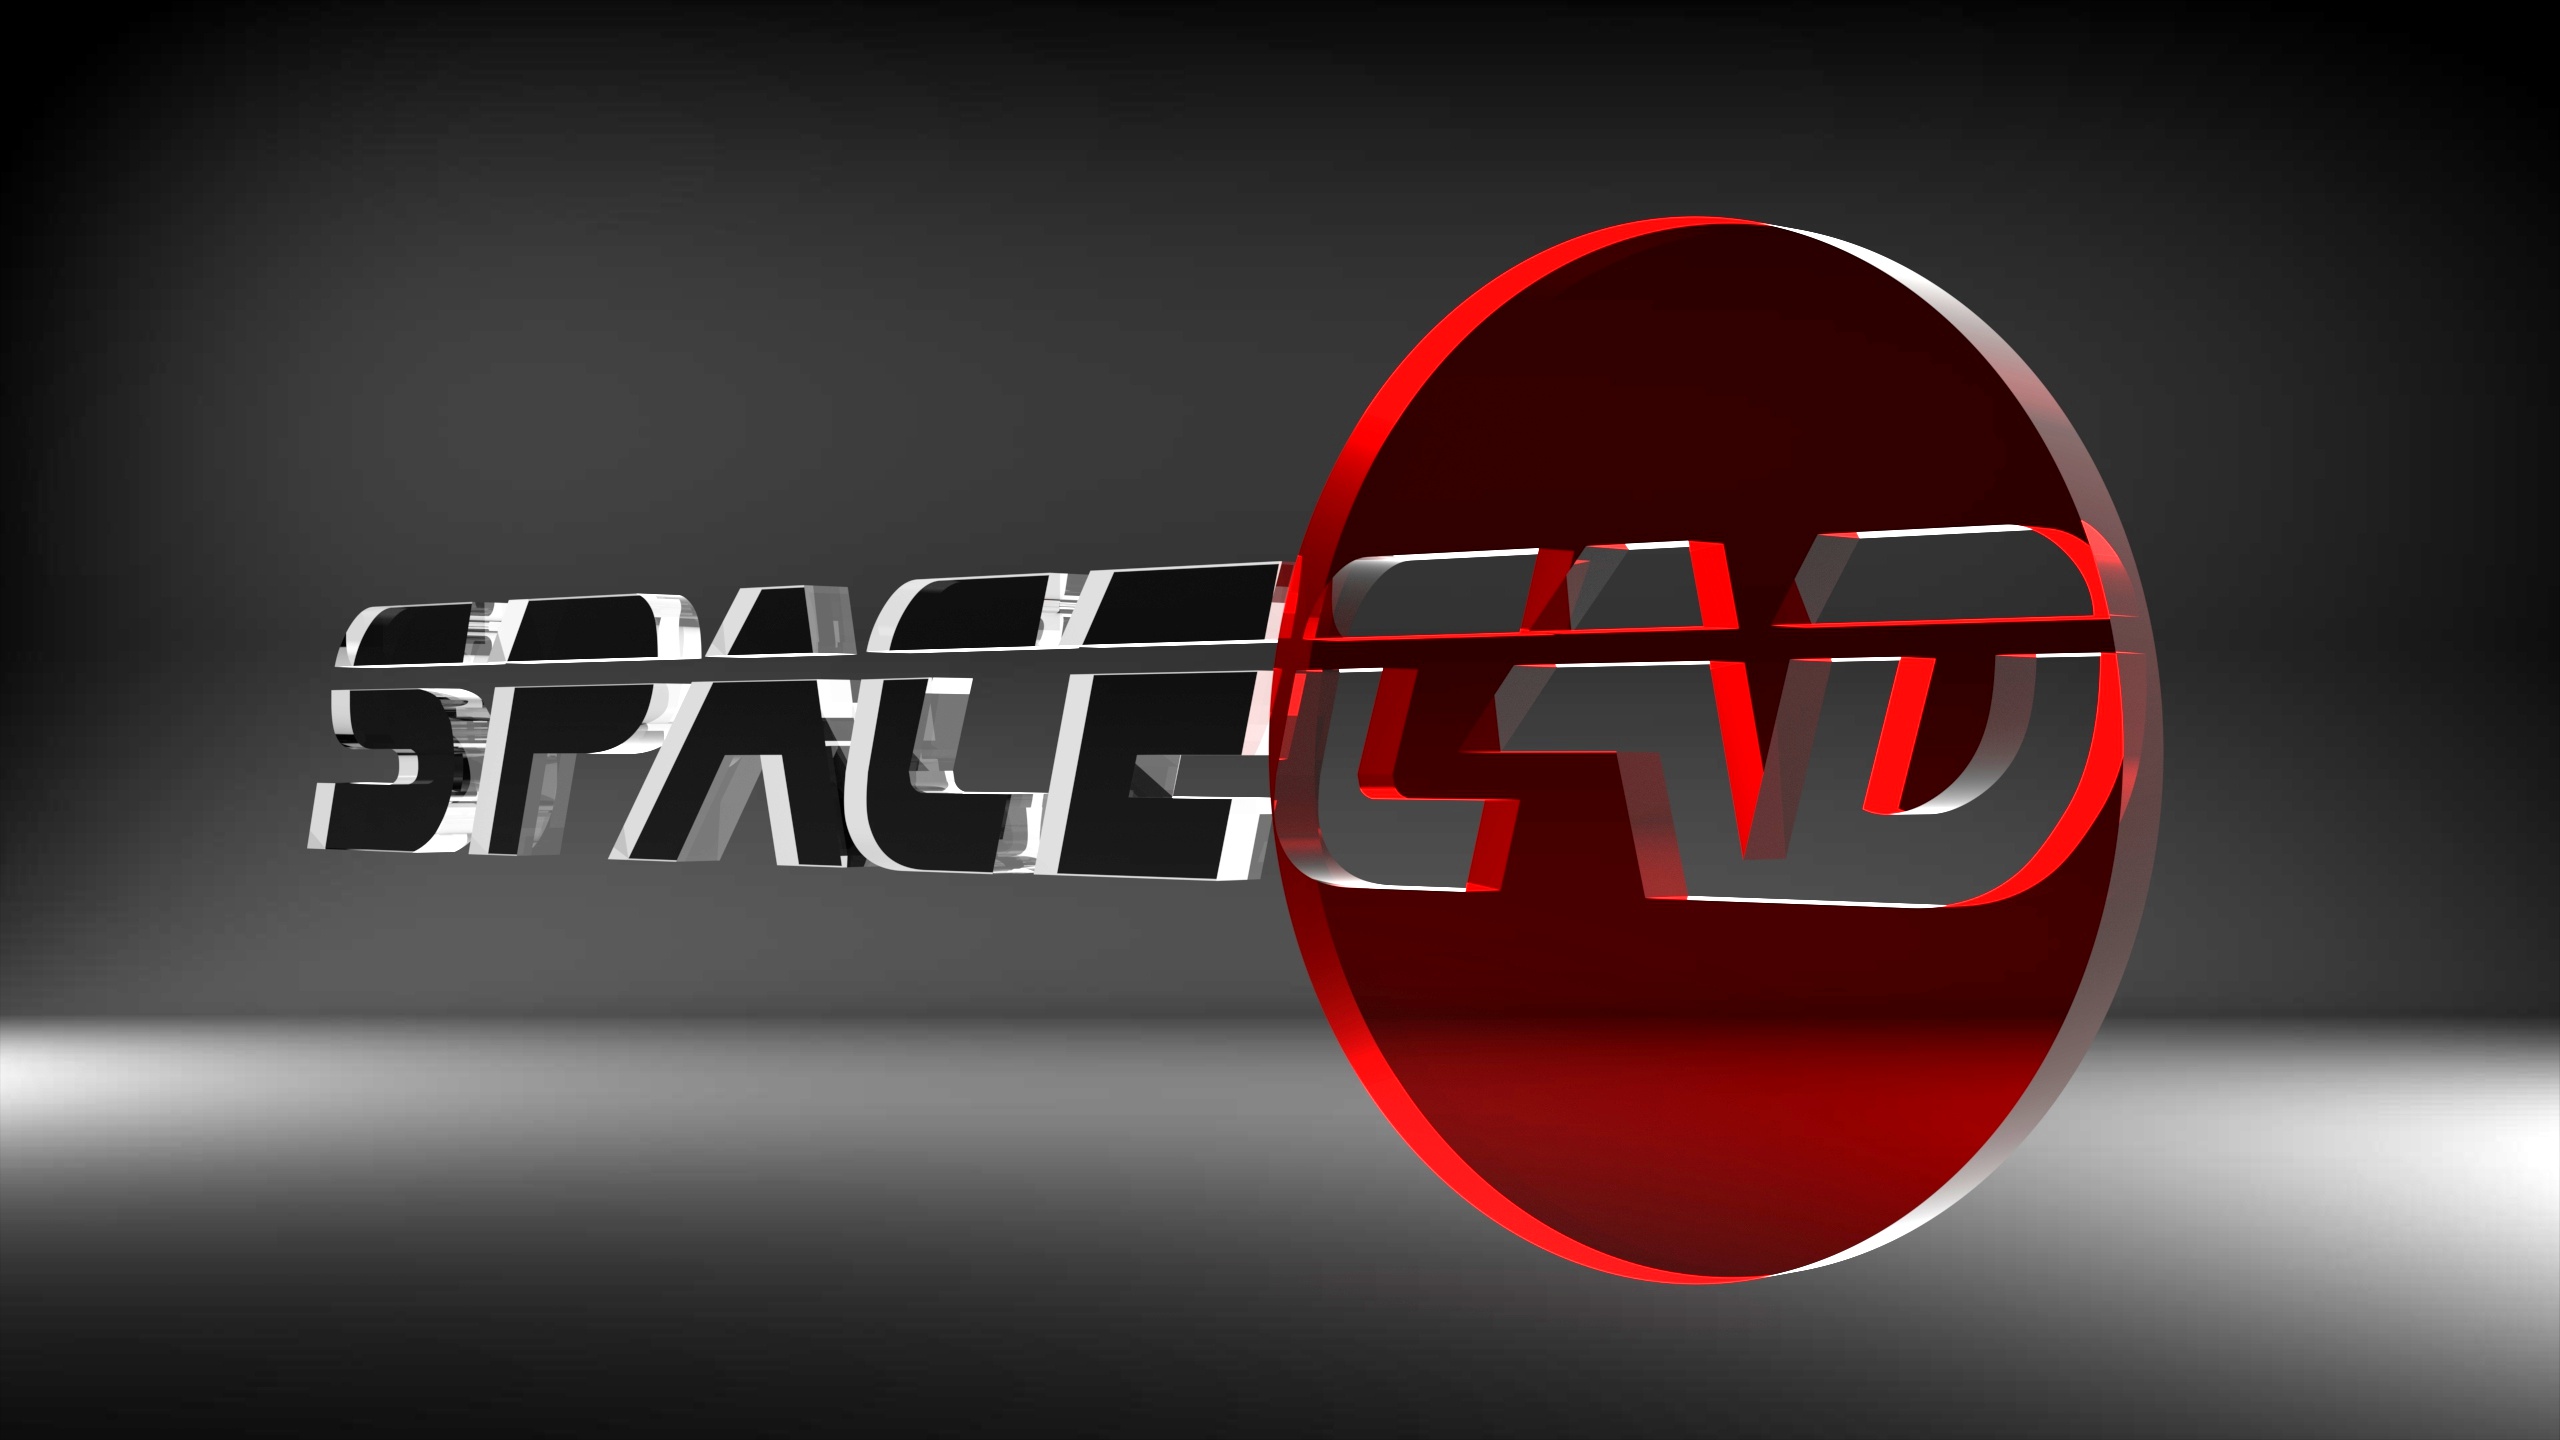 spacecad_logo.1.jpg - 369.74 kB